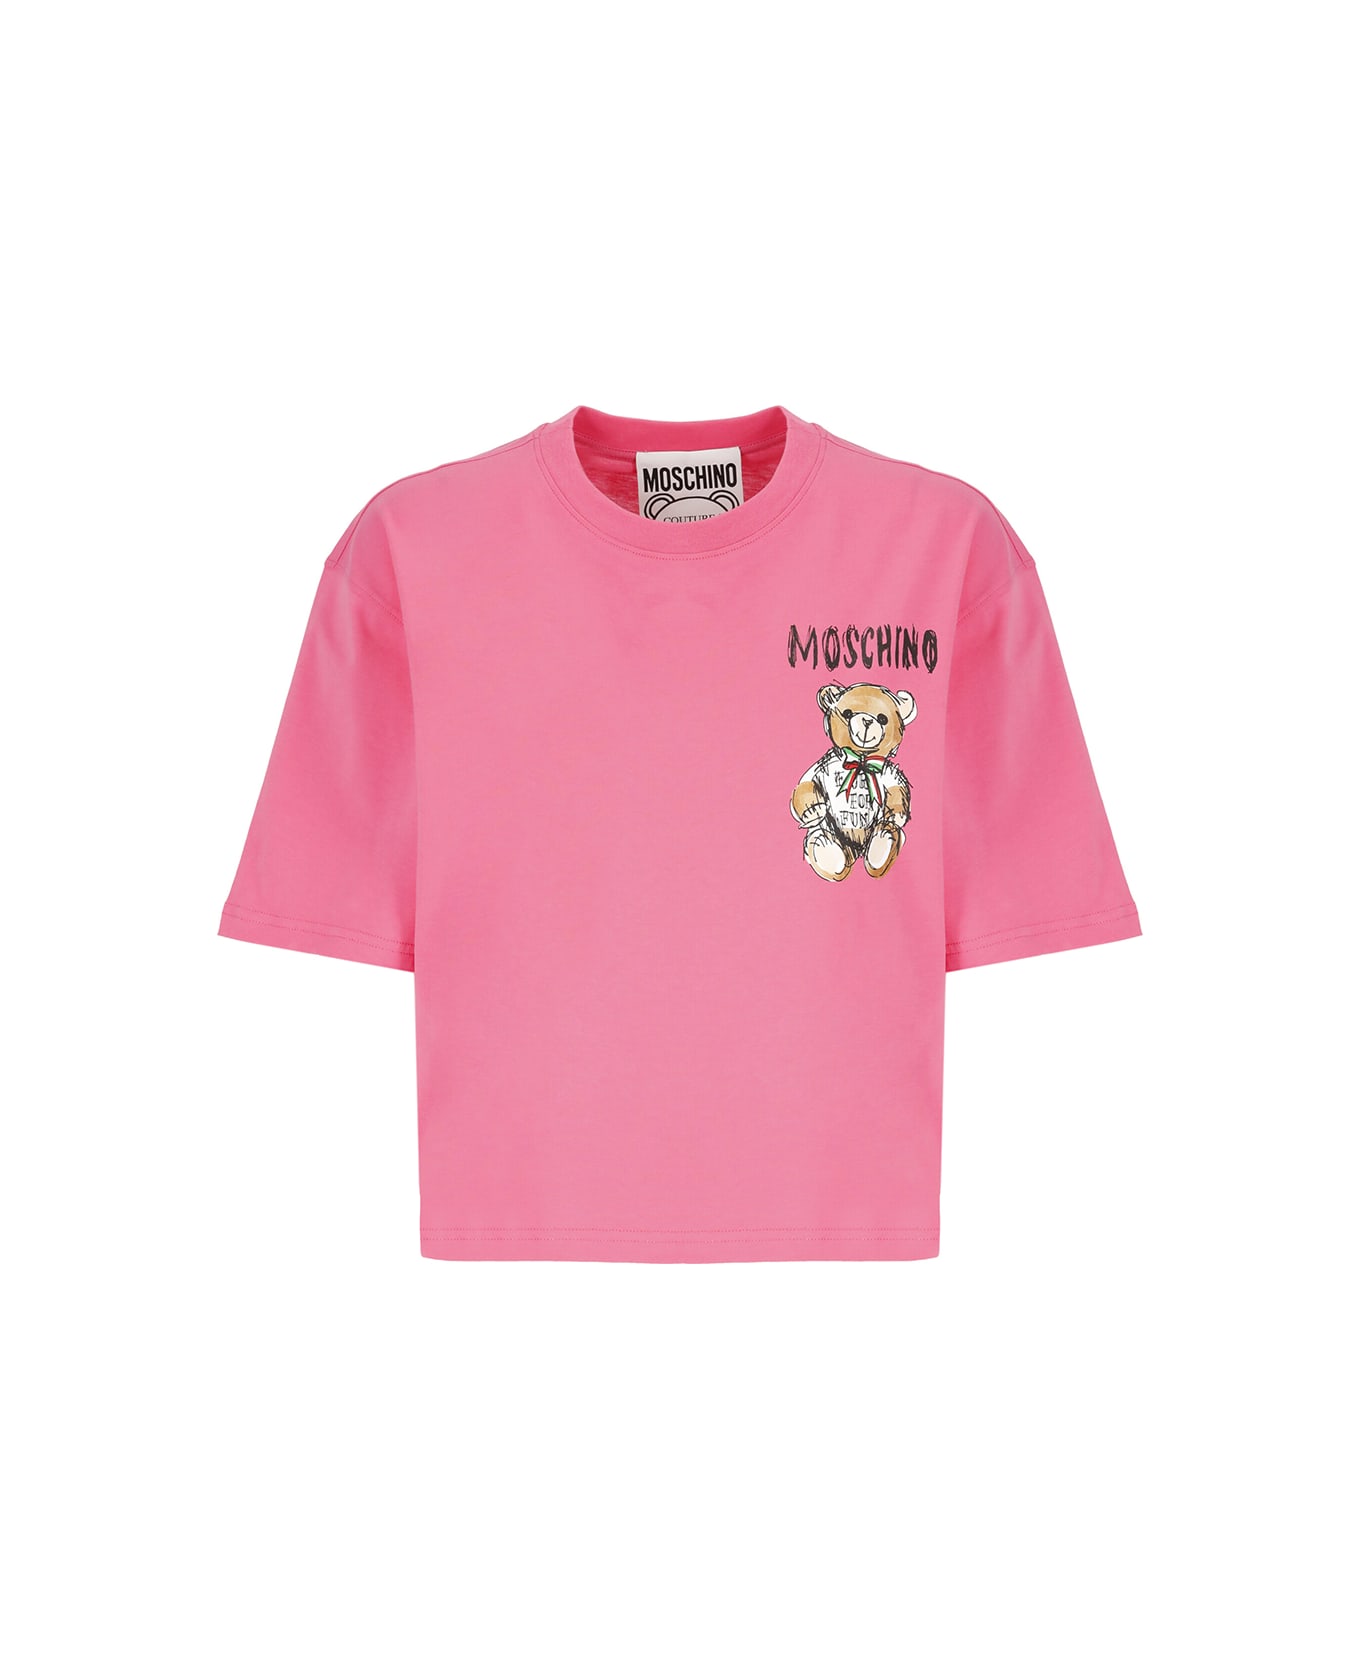 Moschino Drawn Teddy Bear T-shirt - Pink Tシャツ